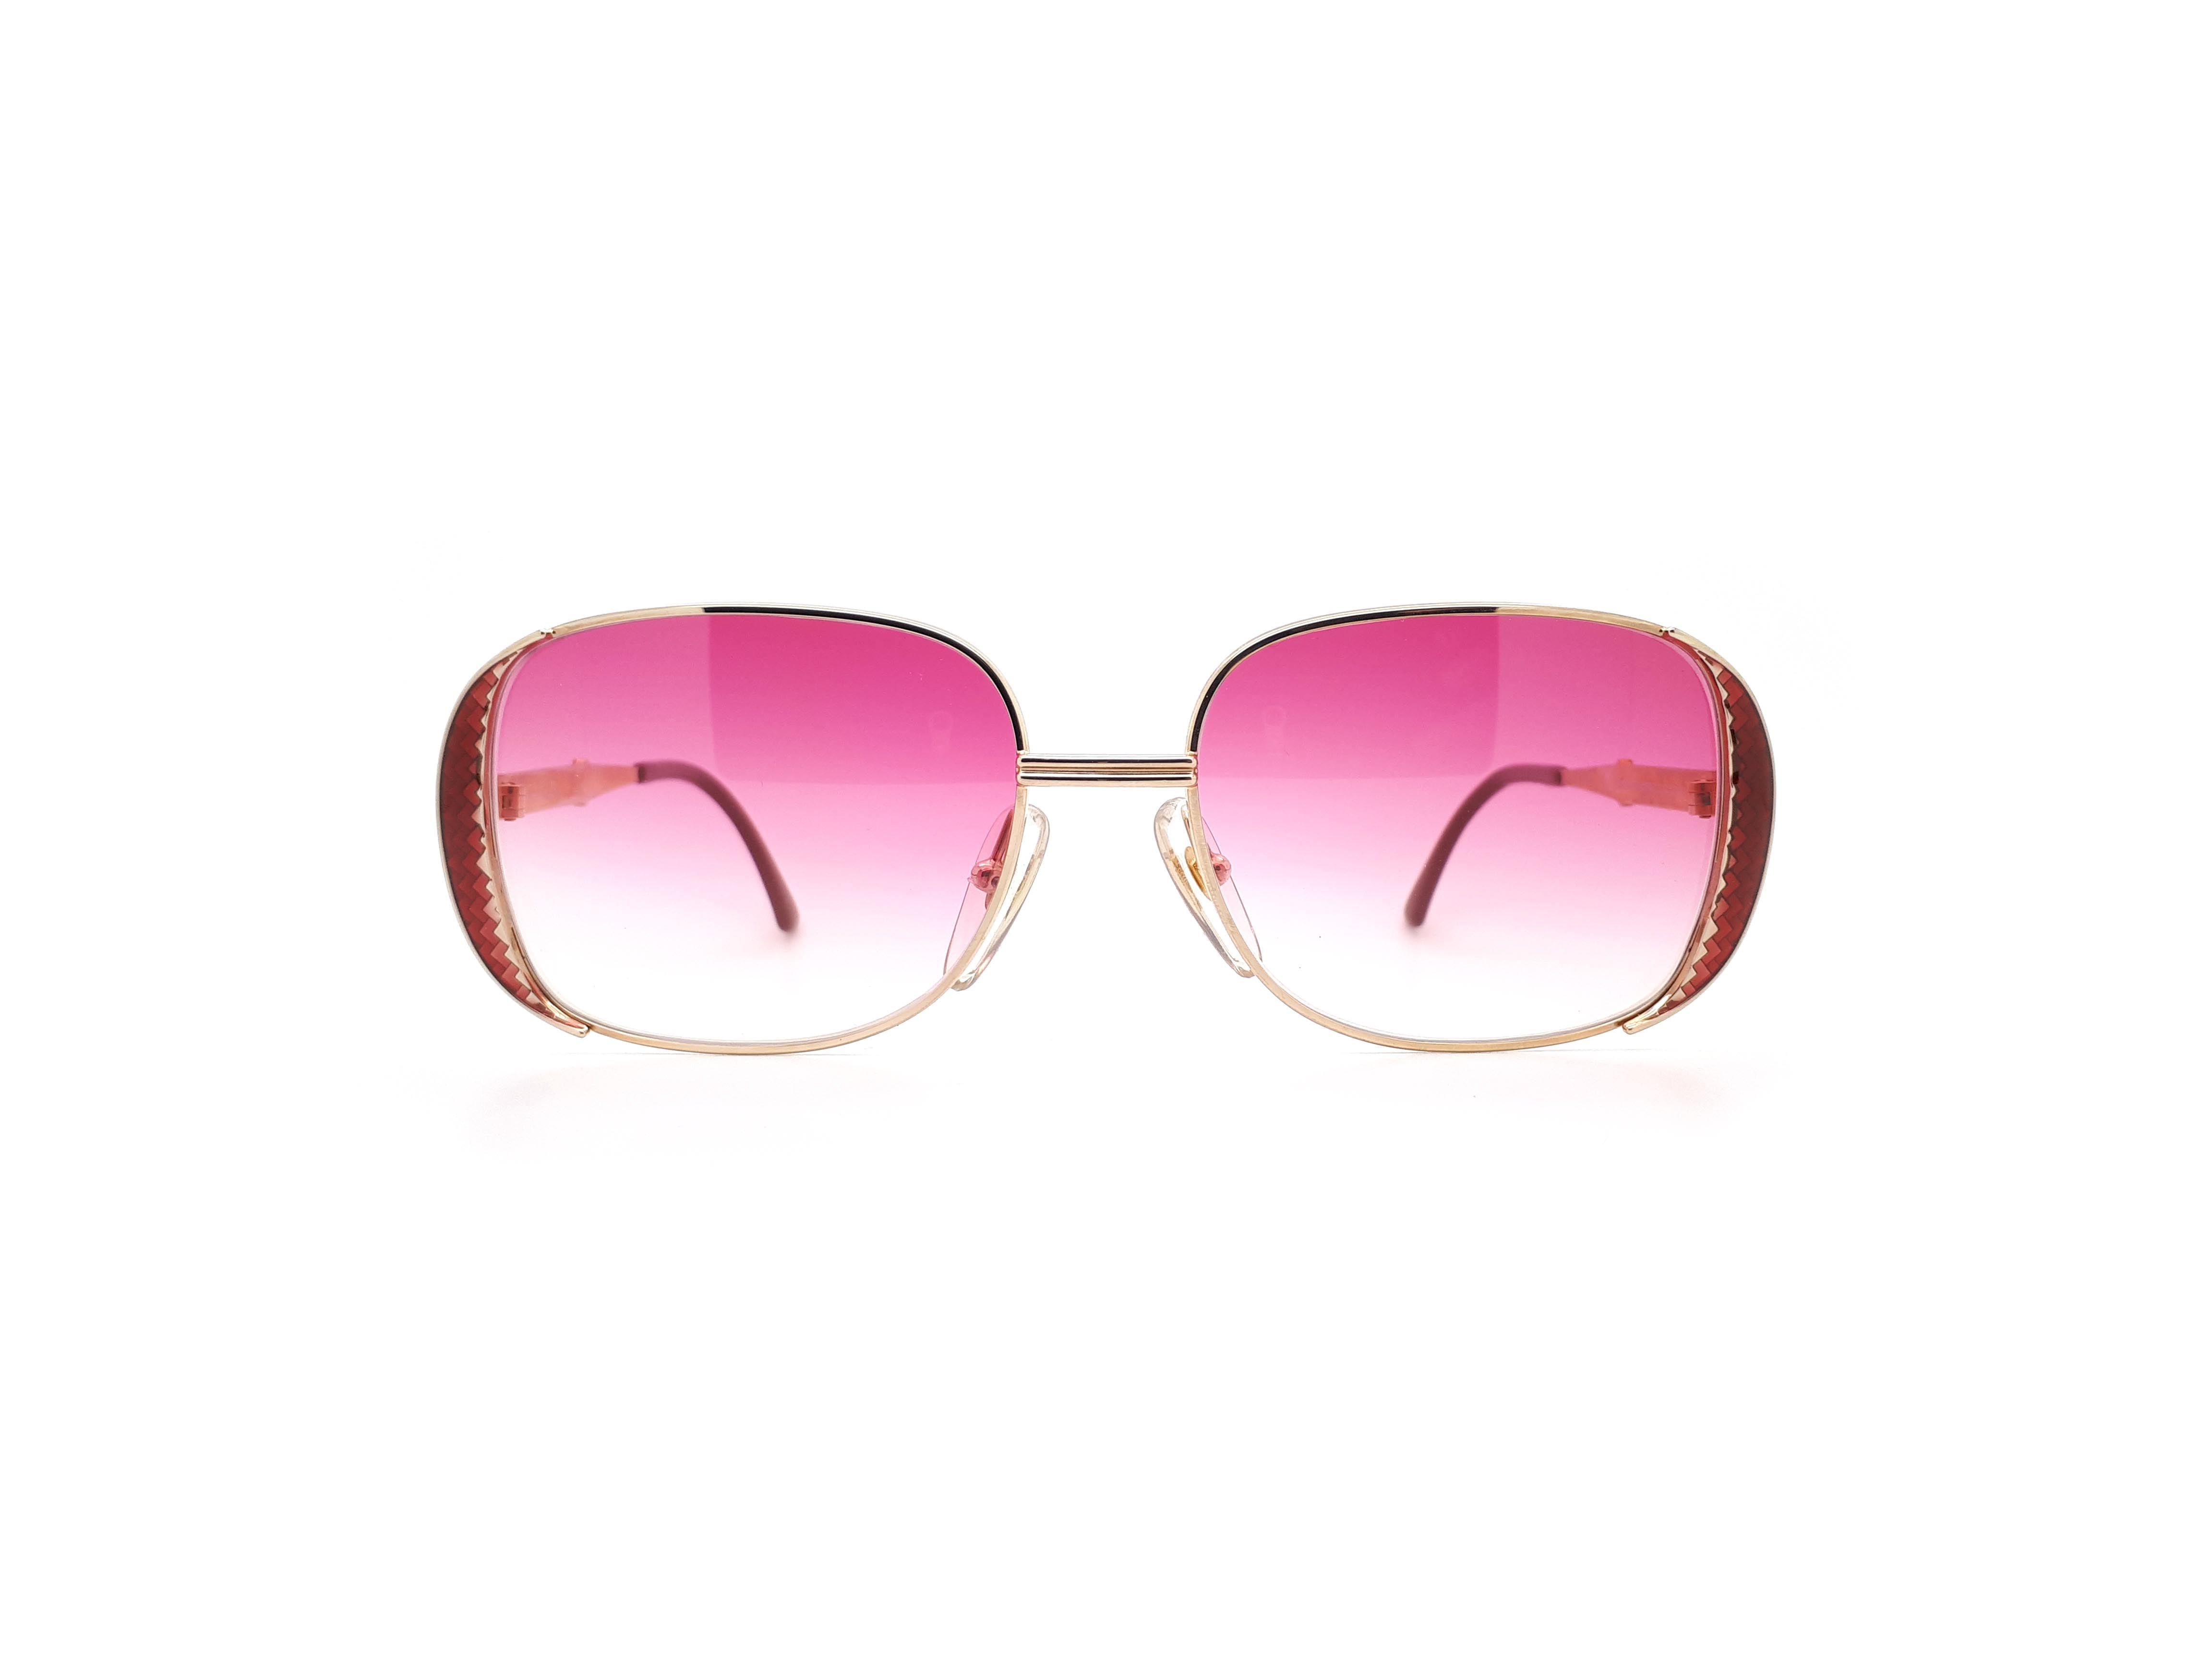 Sunglasses Christian Dior 2387 Ladies Pink 80's Sunglasses